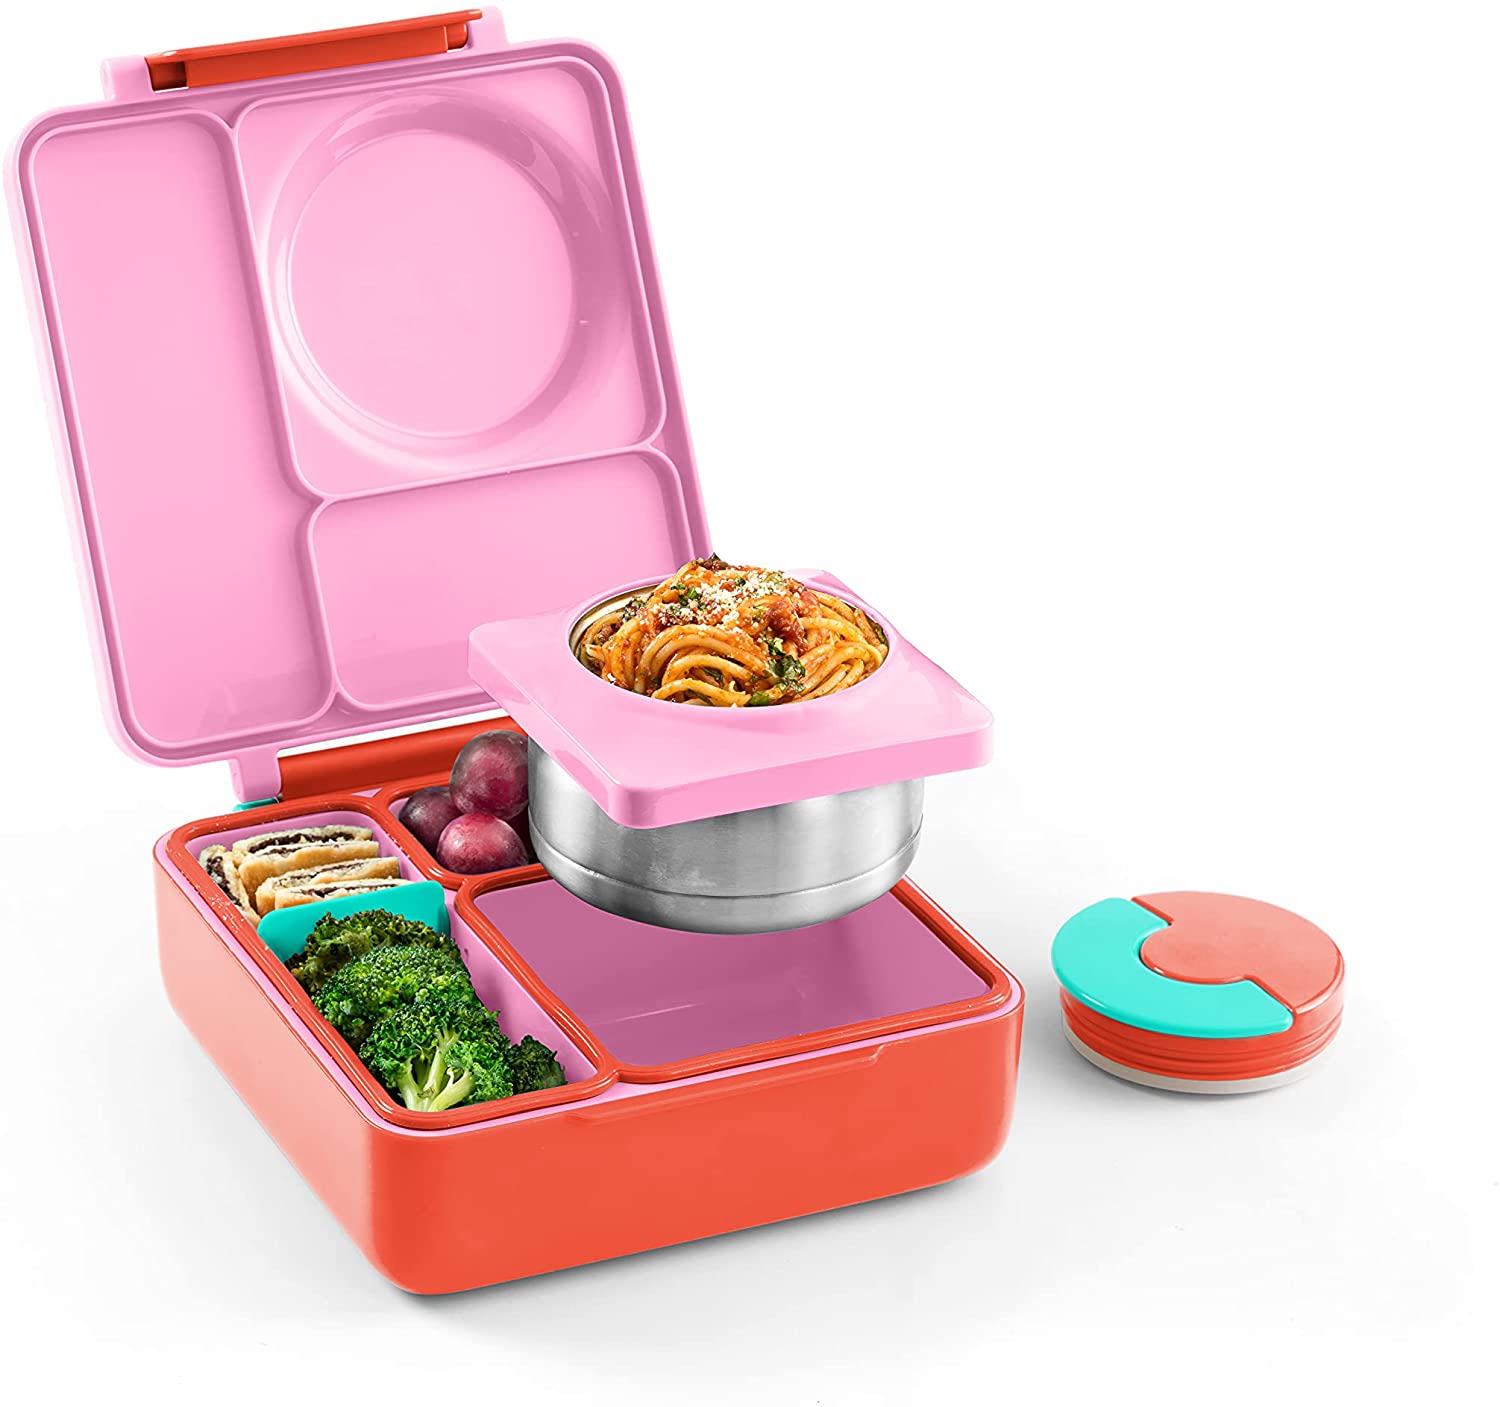 https://www.dontwasteyourmoney.com/wp-content/uploads/2020/09/omiebox-insulated-bento-lunchbox-for-kids.jpg